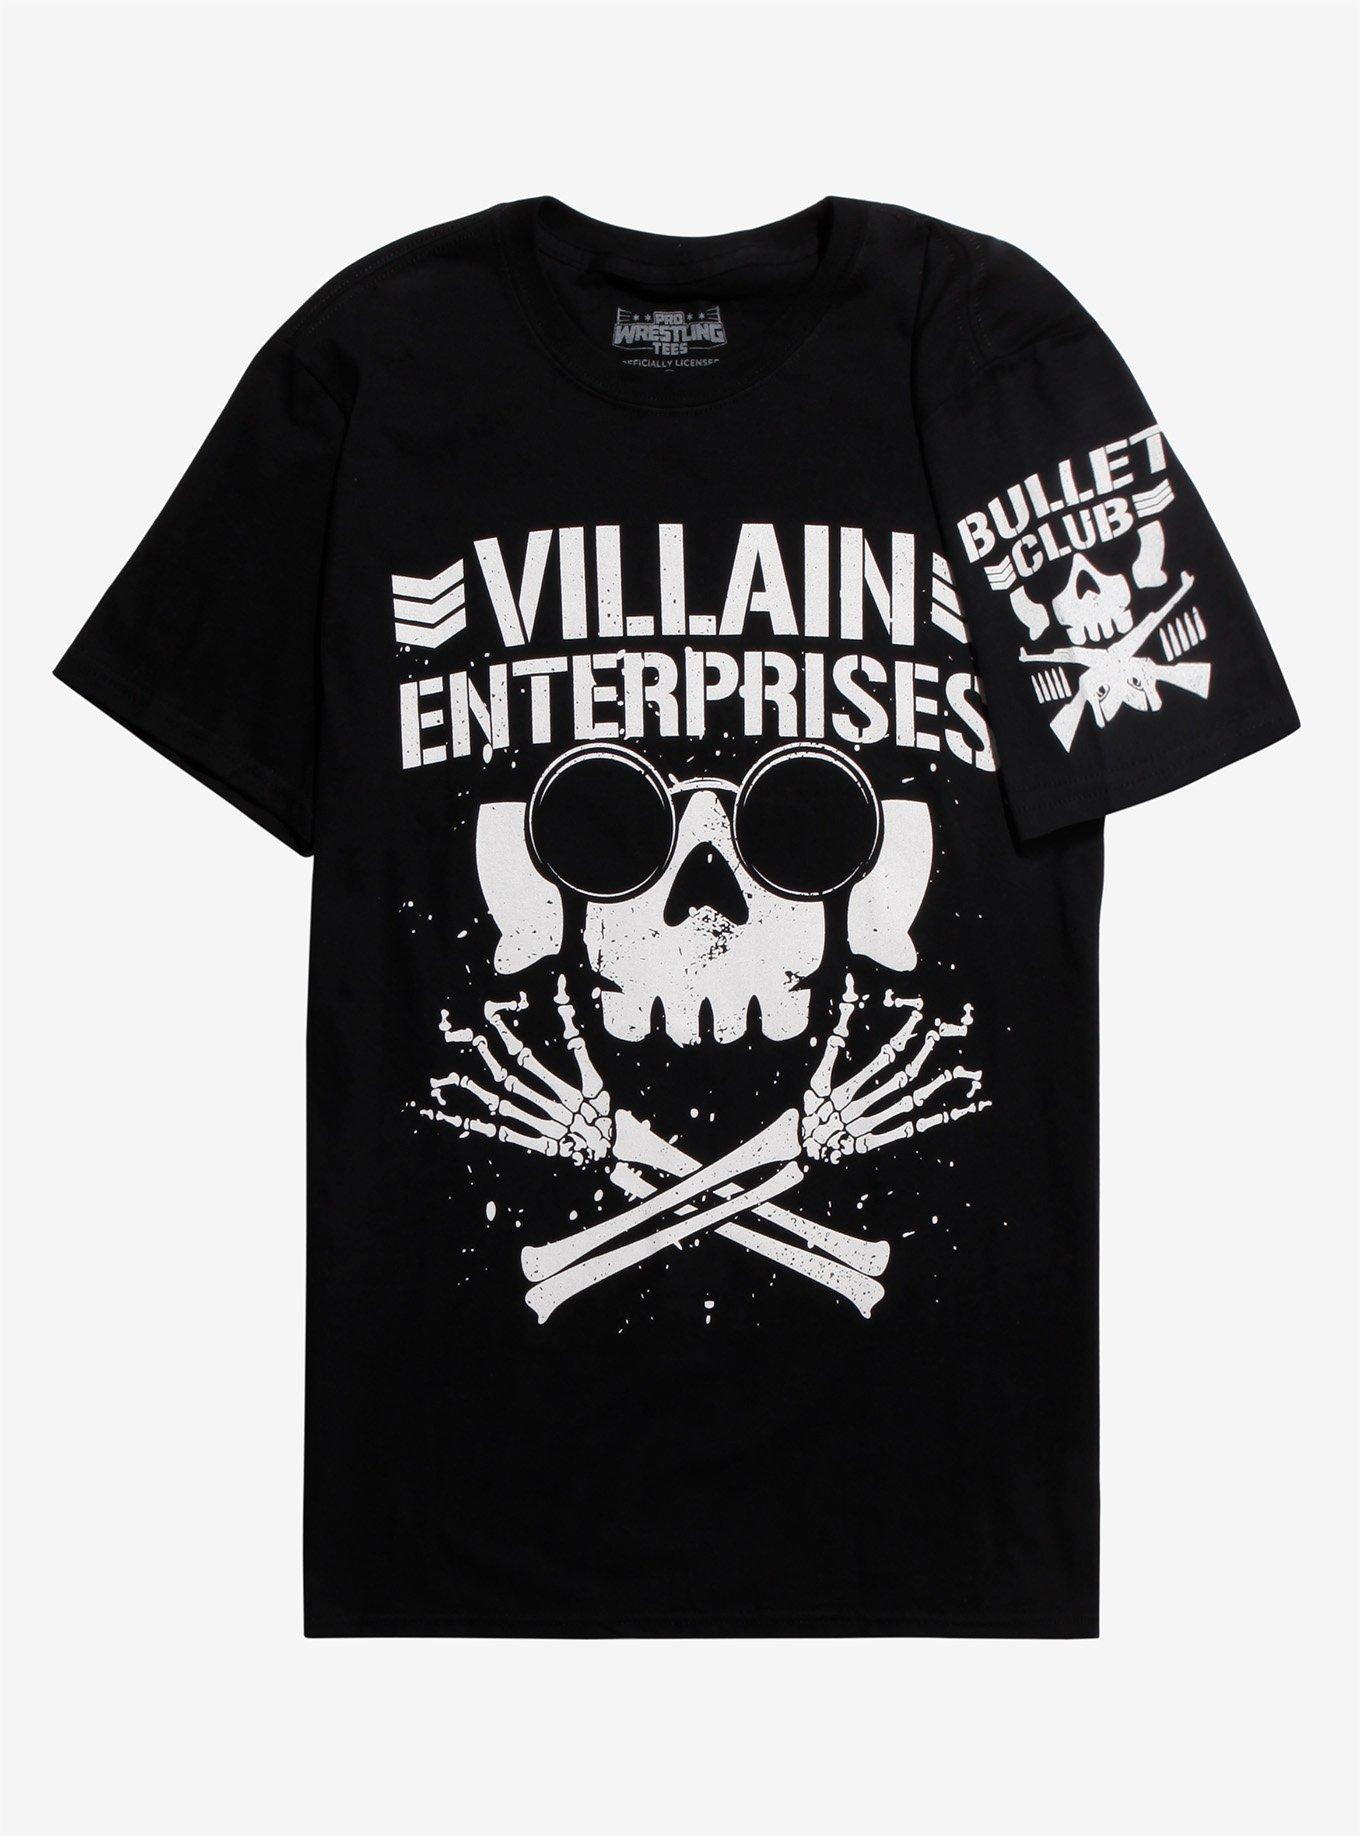 New Japan Pro-Wrestling Bullet Club Villain Enterprises T-Shirt | Hot Topic